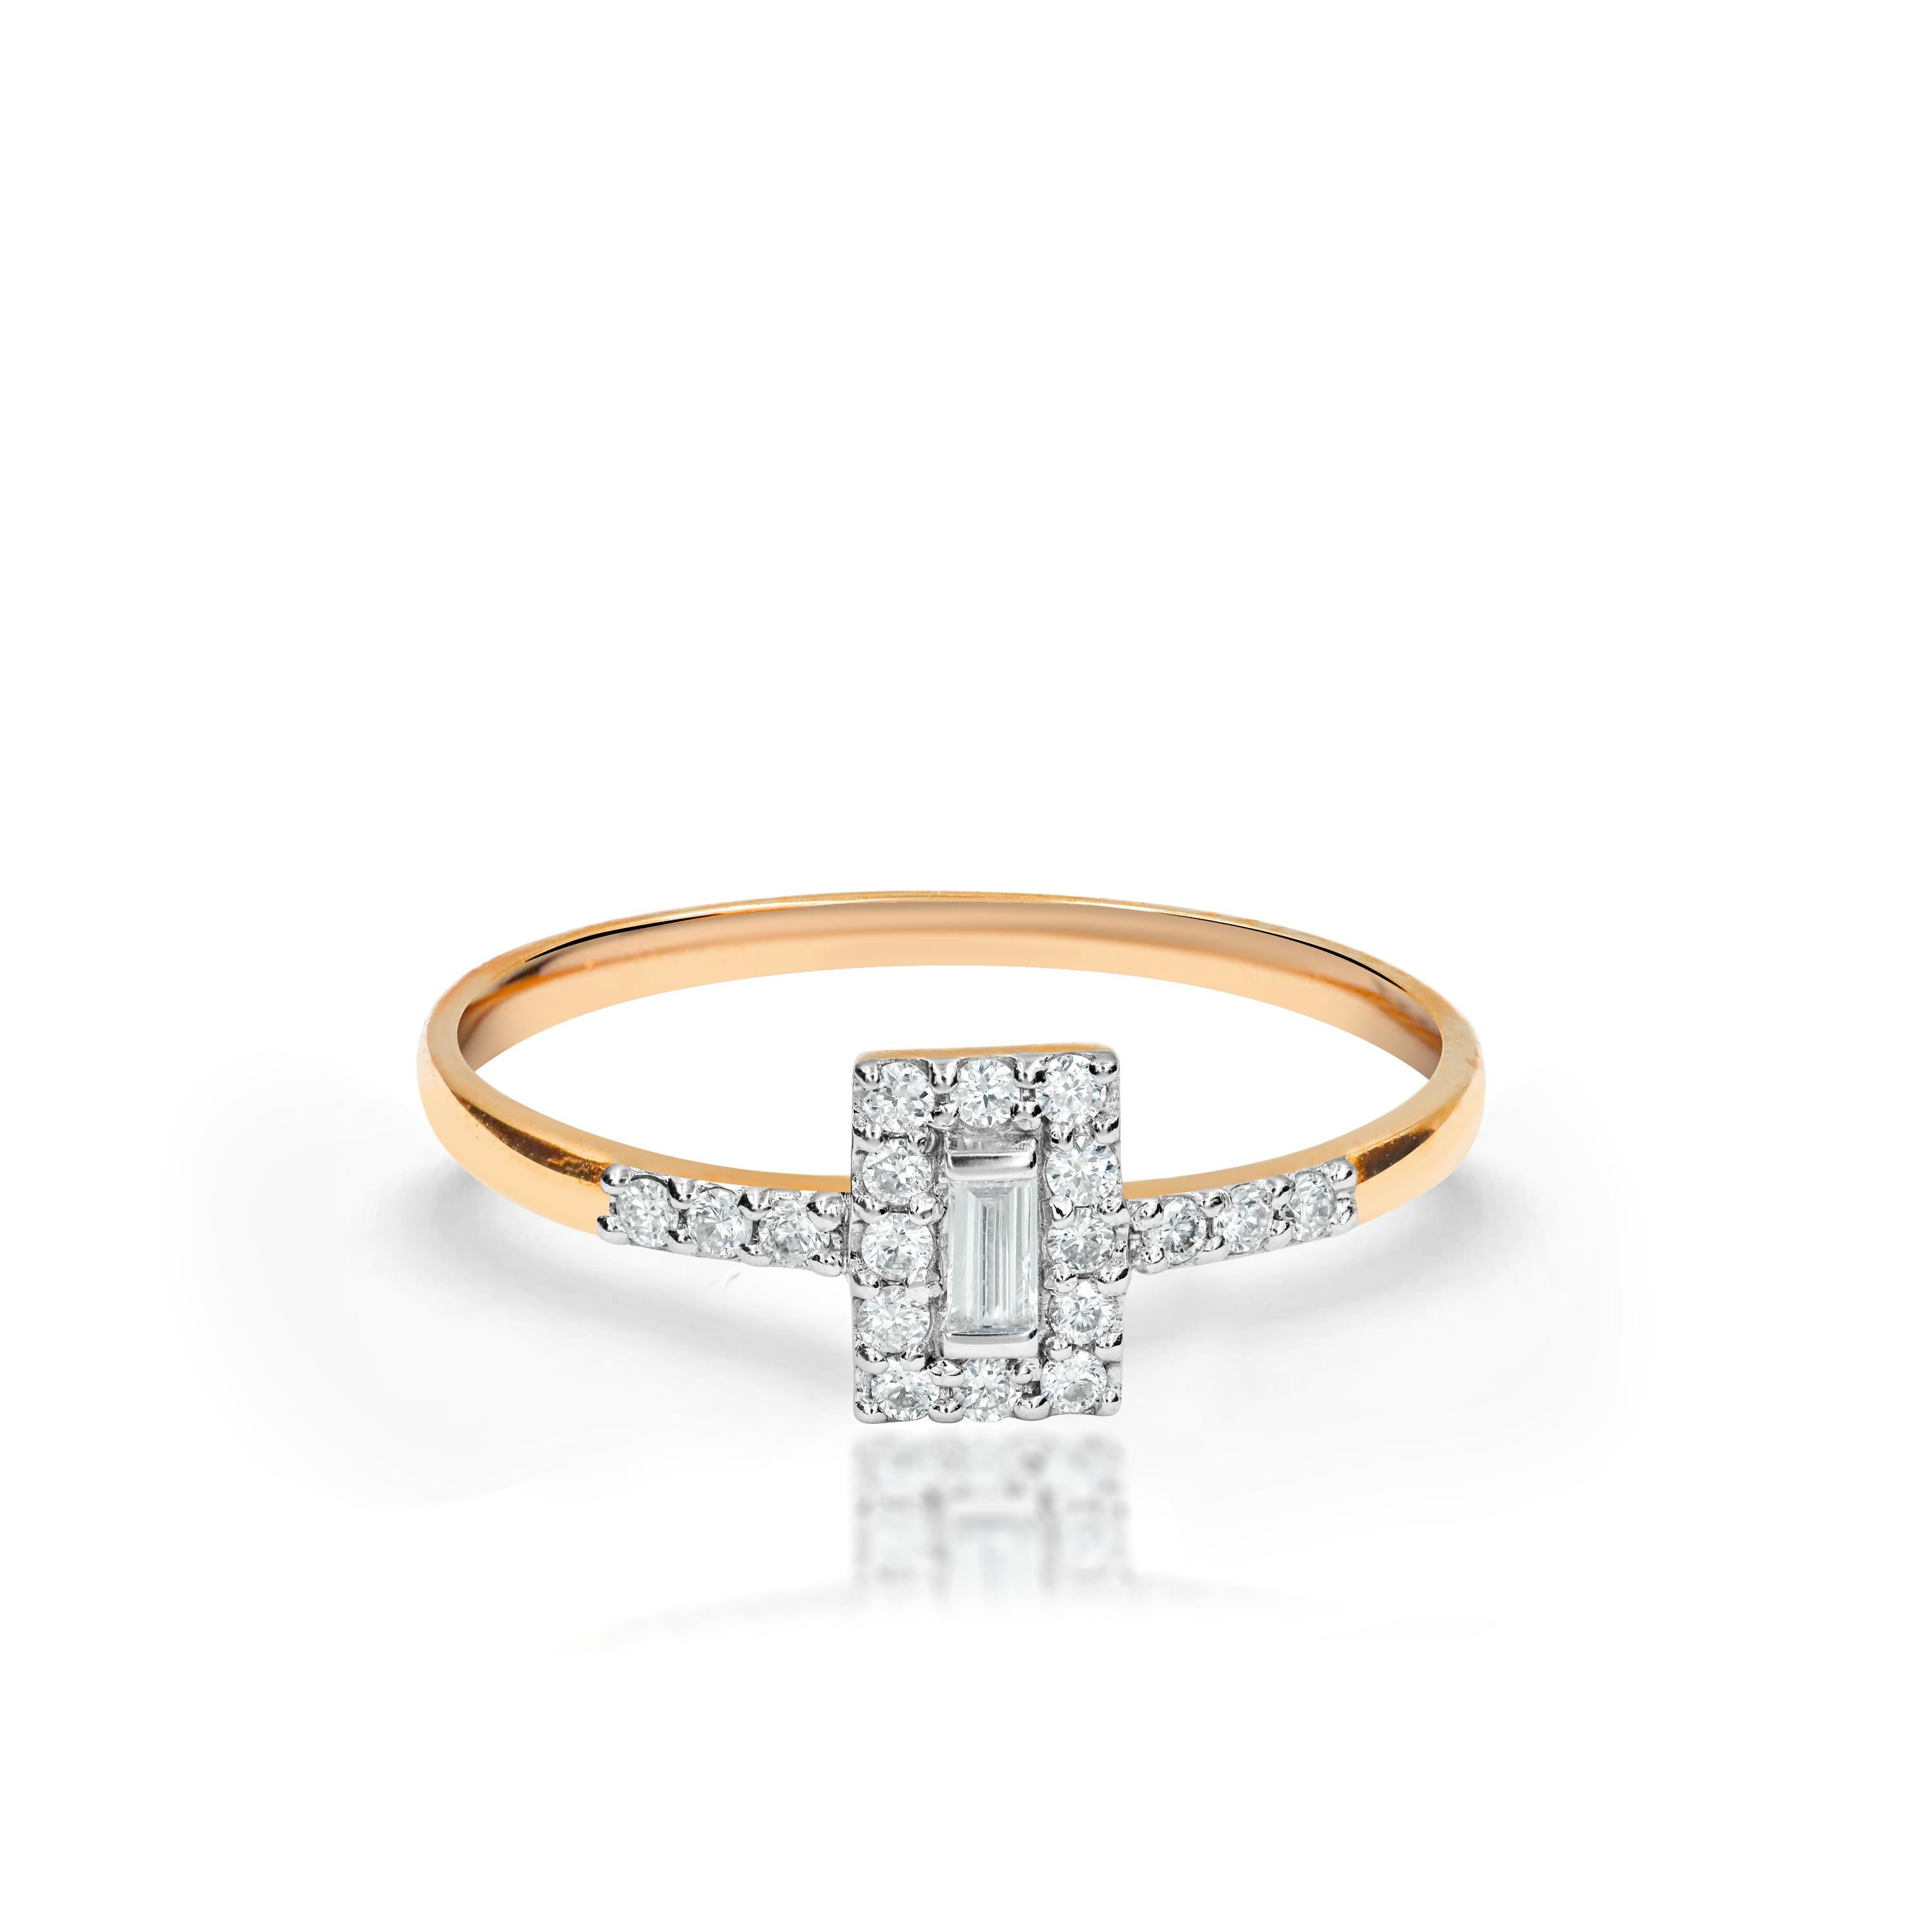 For Sale:  18k Gold Baguette Ring Diamond Baguette Ring Engagement Ring 2